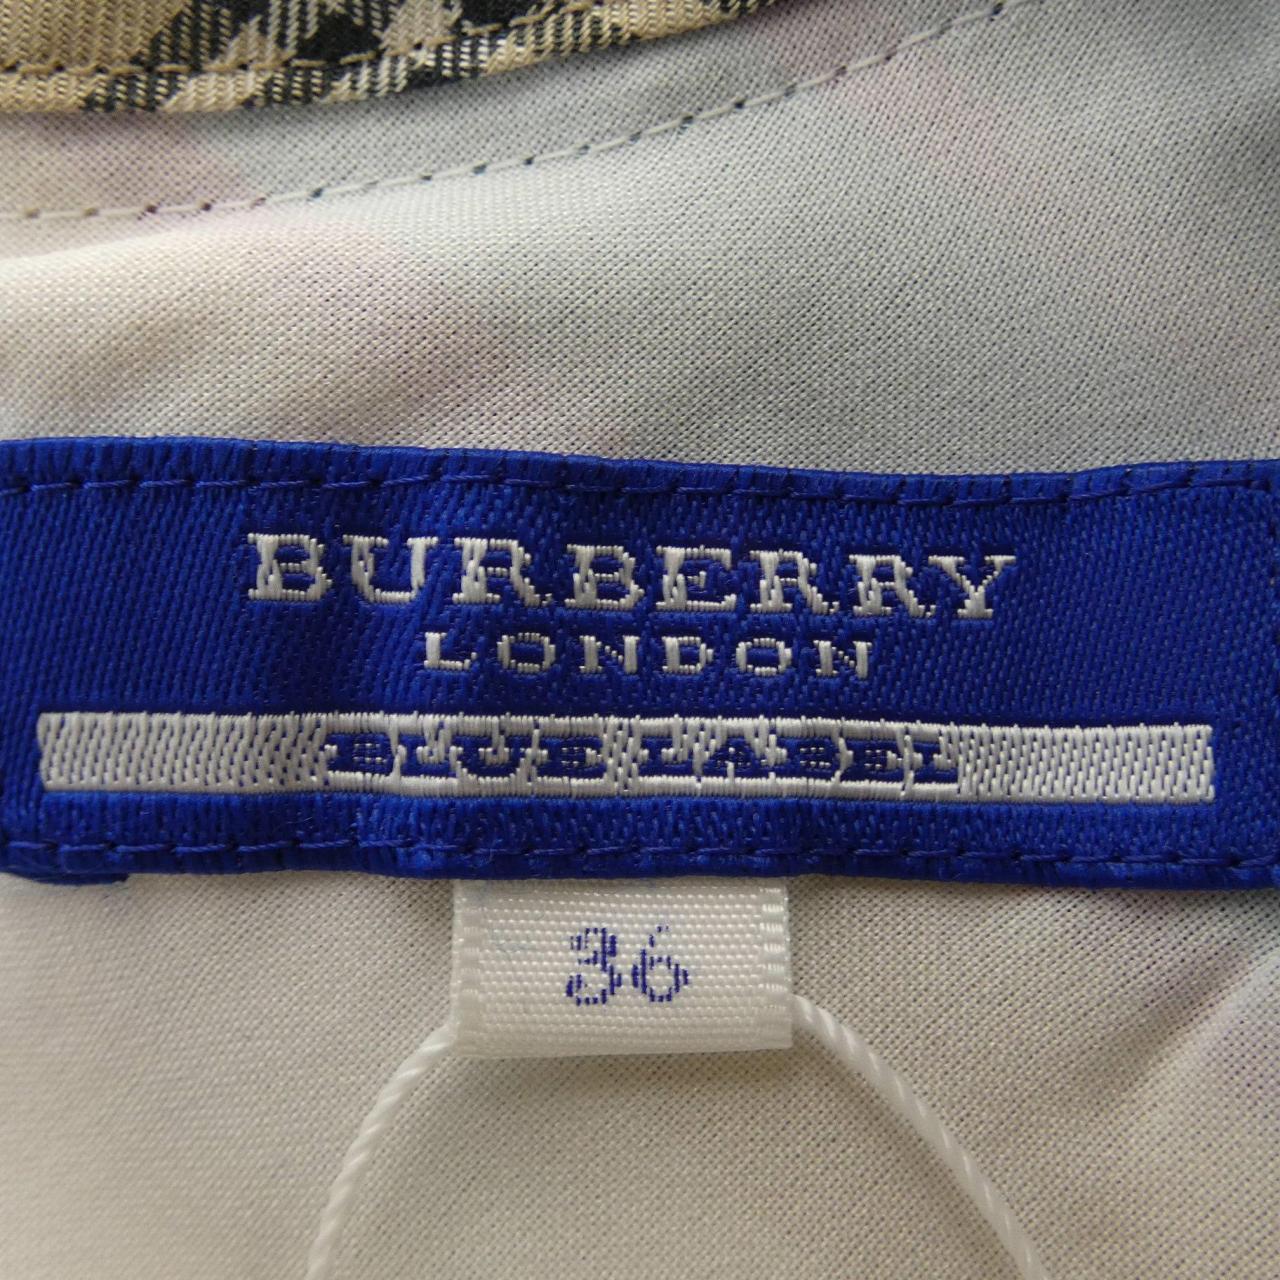 BURBERRY BLUE LABEL DRESS